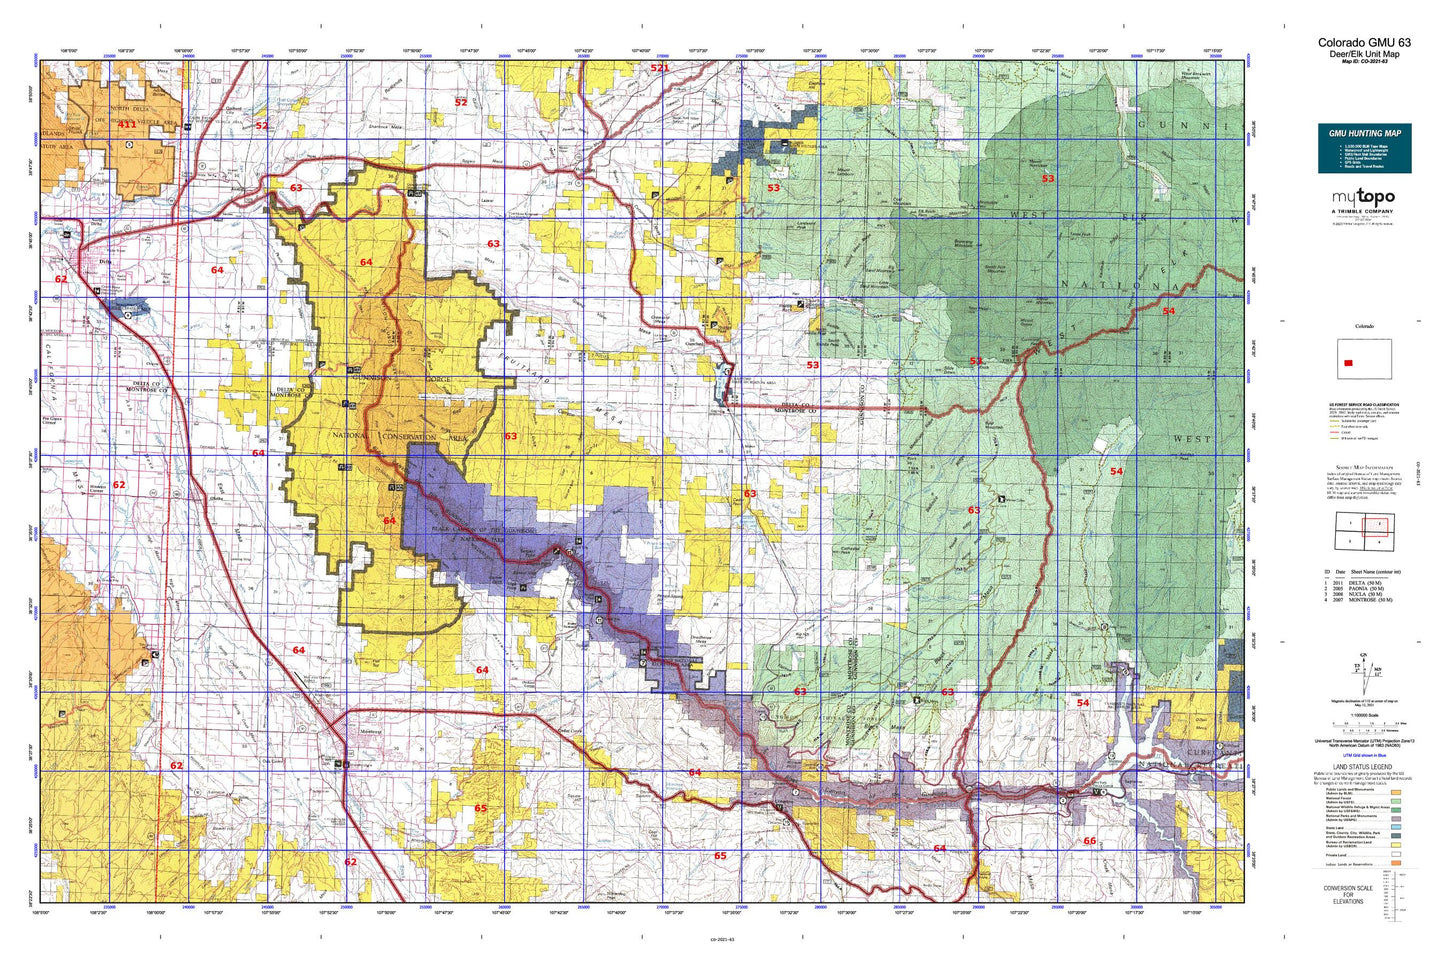 Colorado GMU 63 Map Image